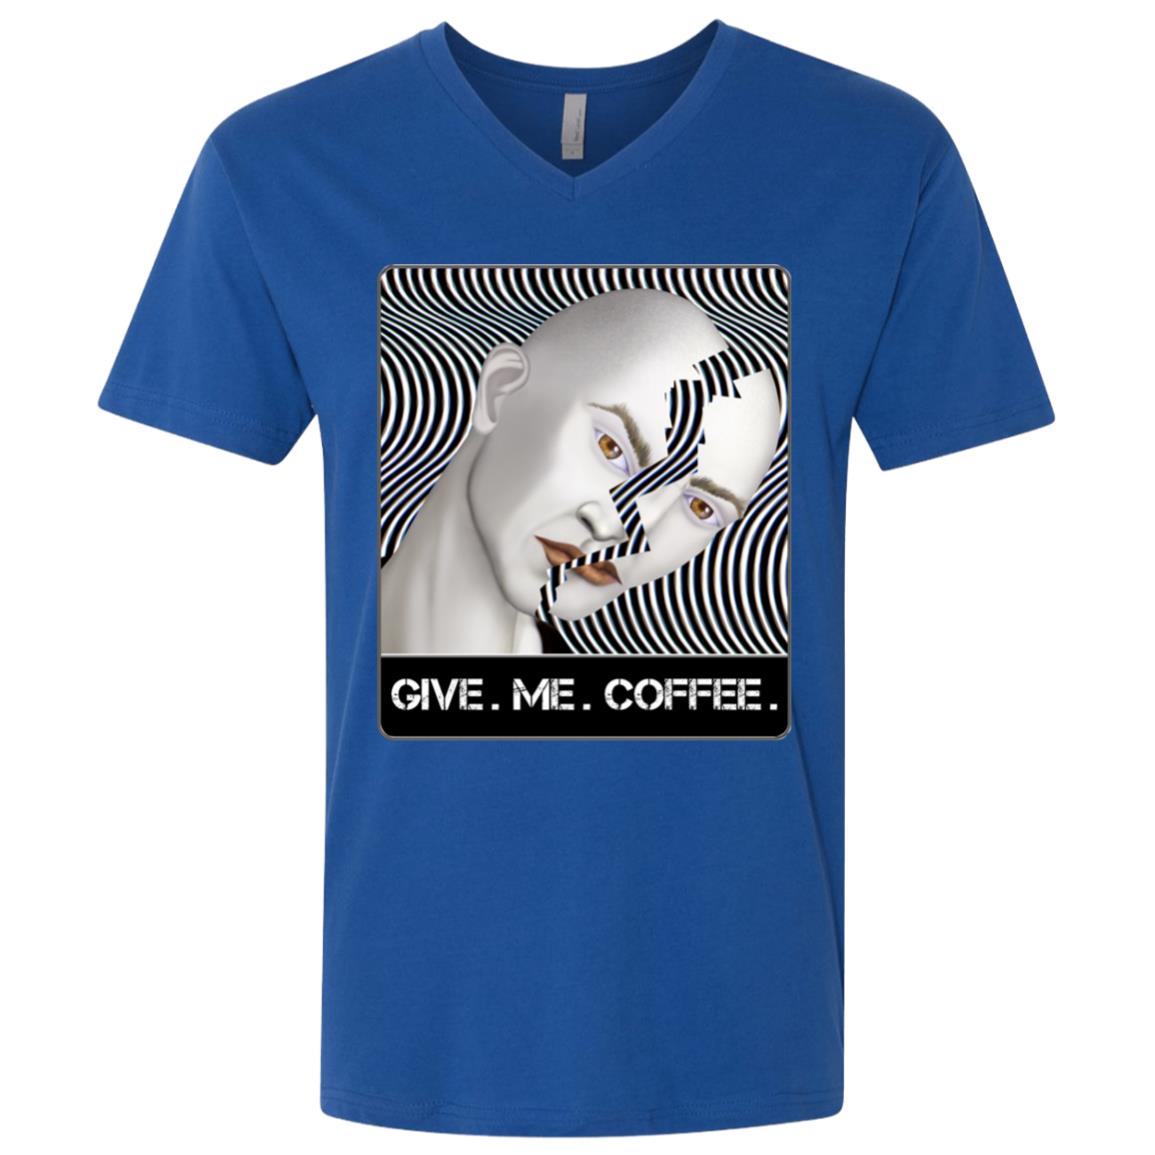 GIVE. ME. COFFEE. - Men's Premium V-Neck T-Shirt